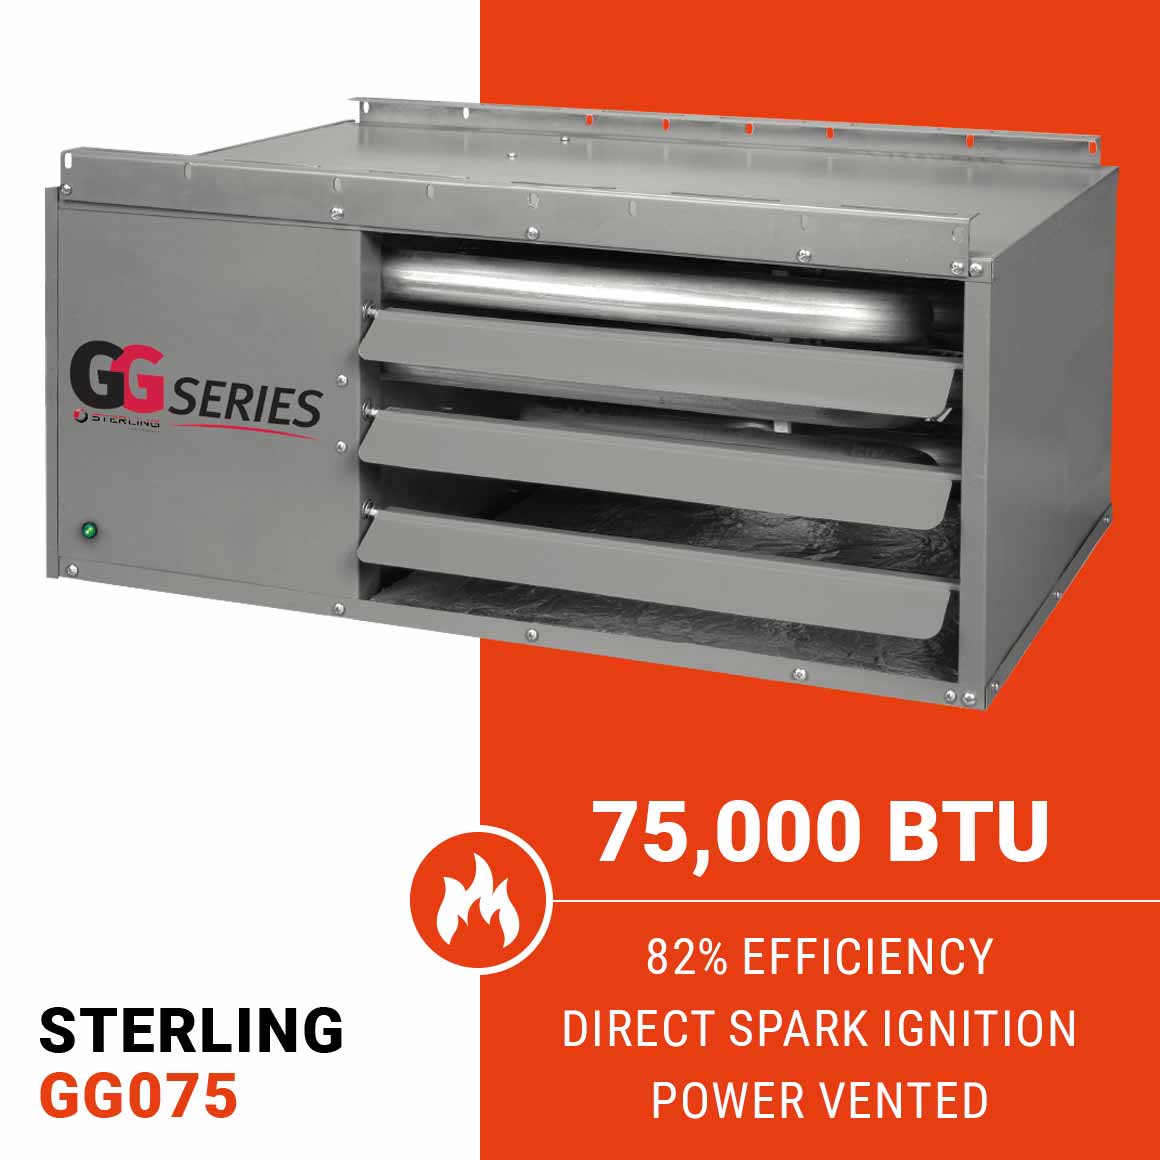 Sterling GG075 Garage Heater